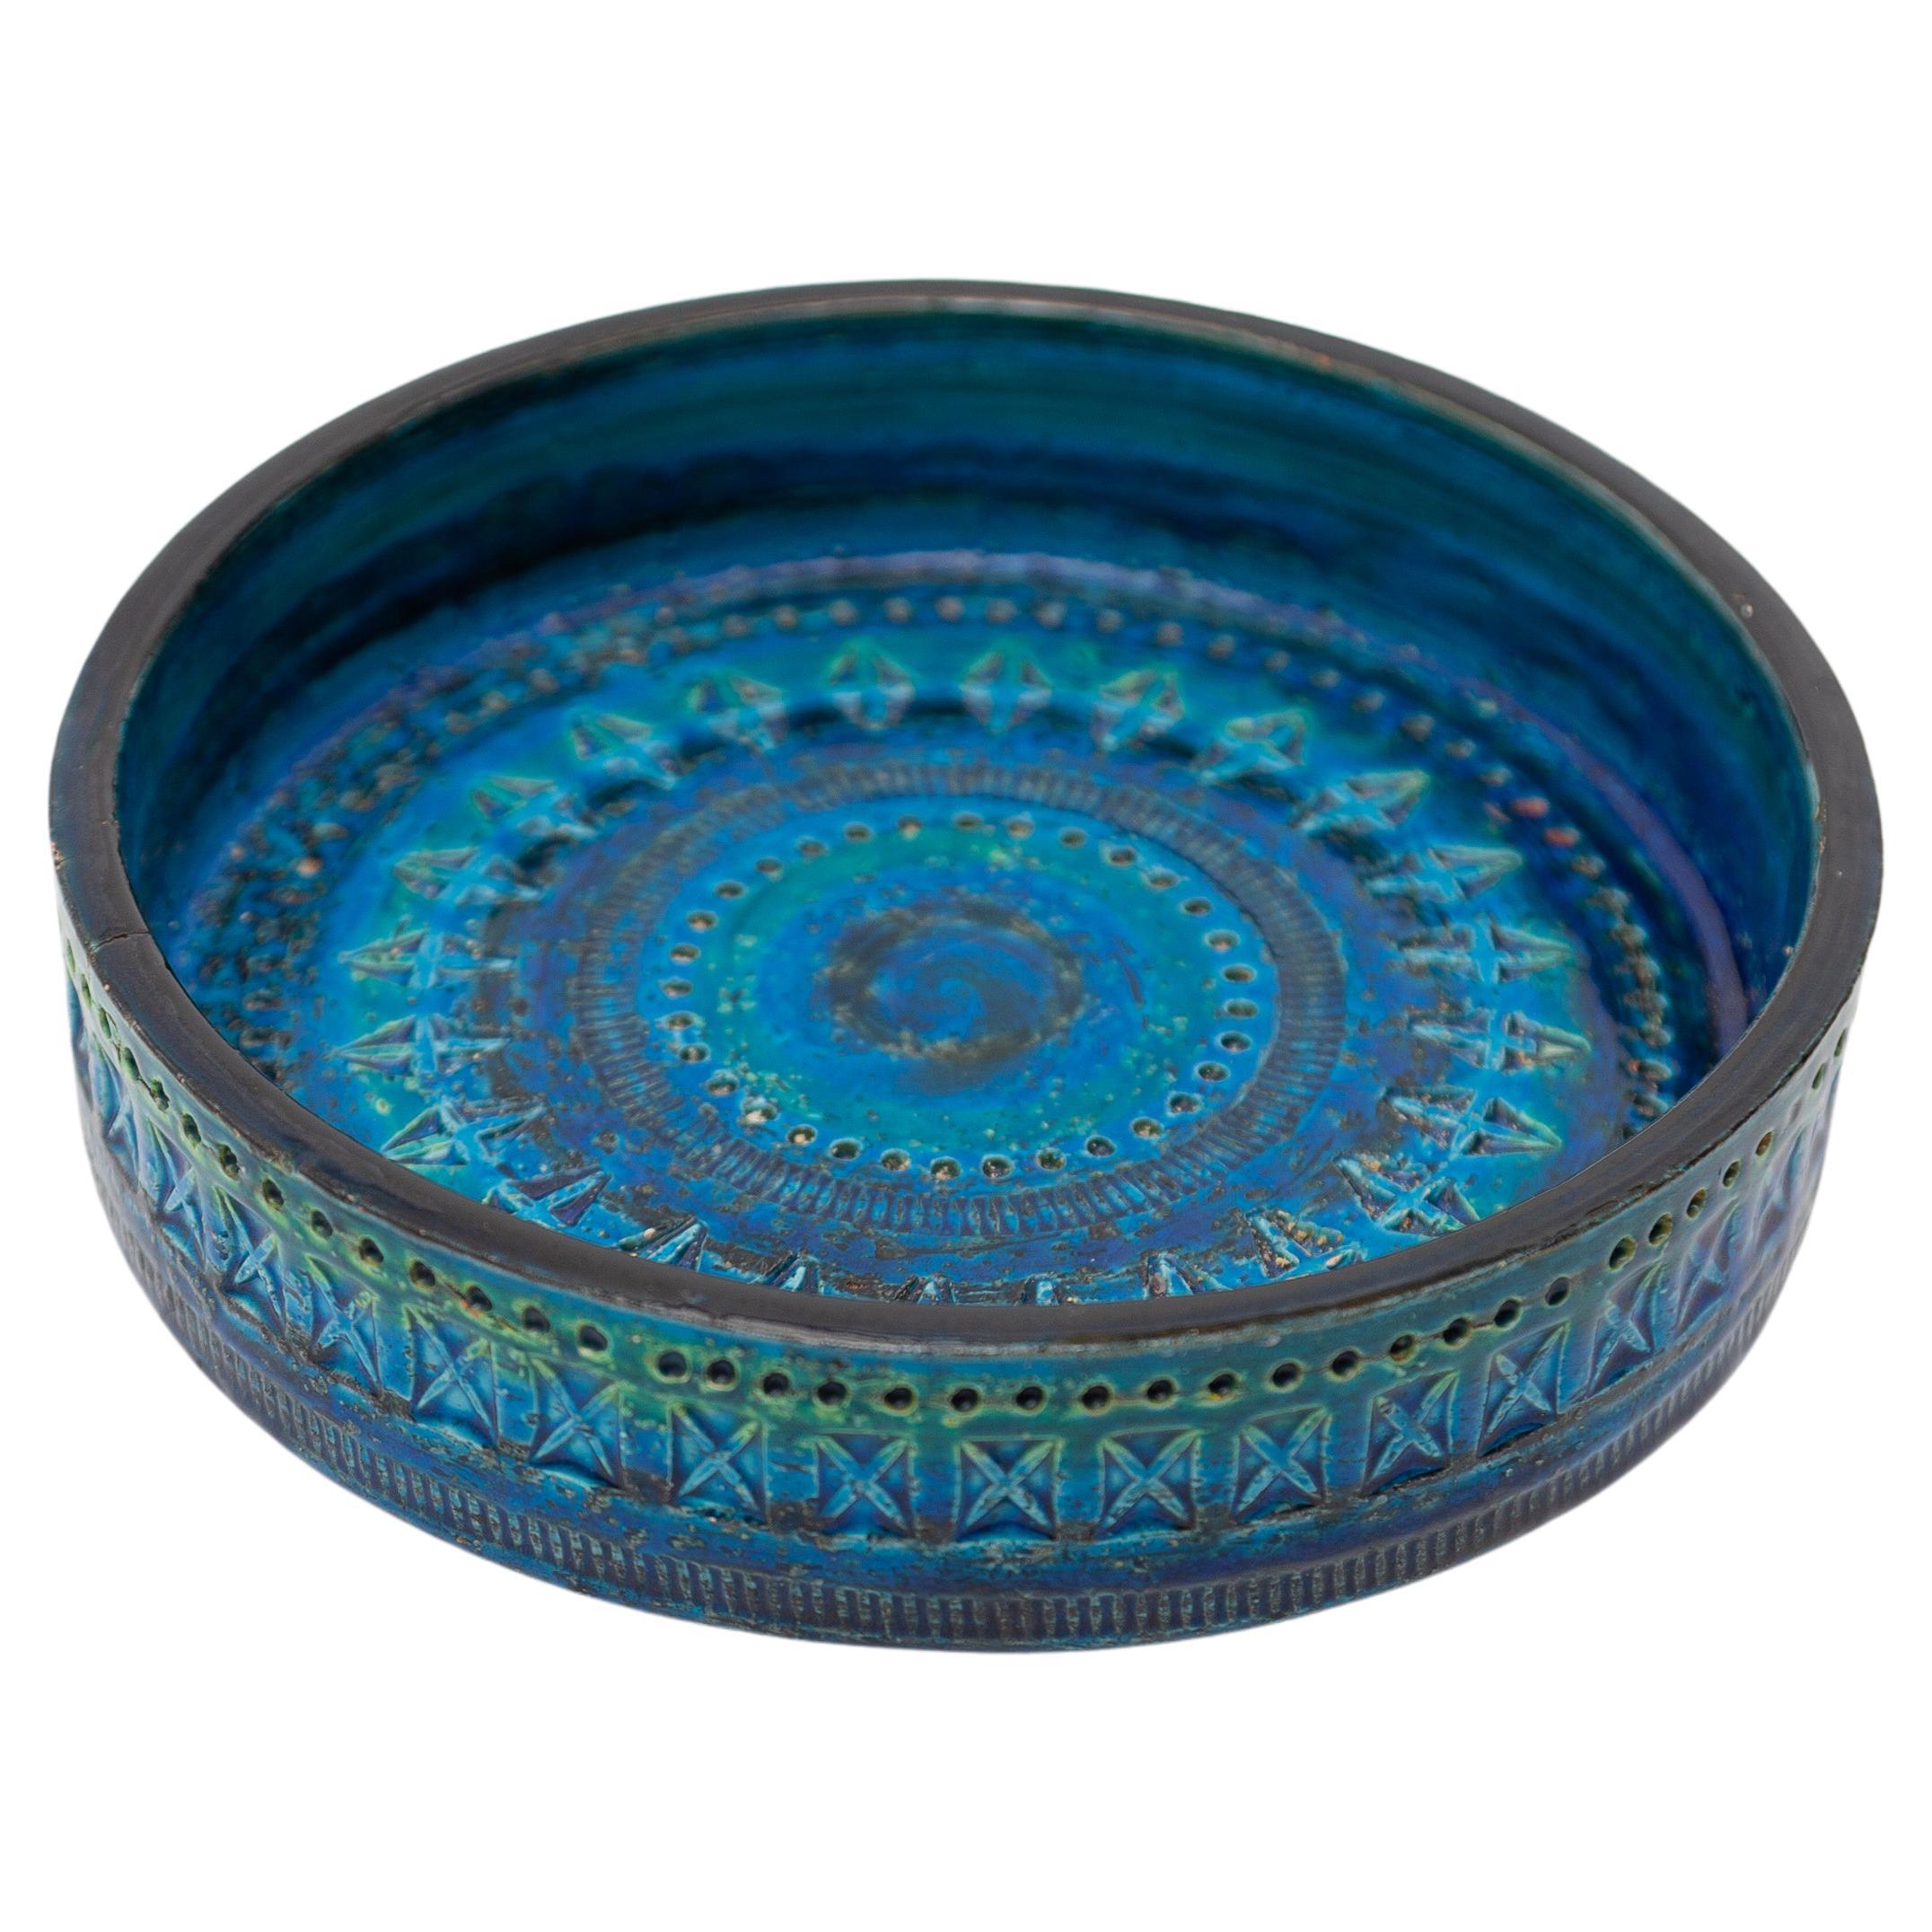 Bitossi Ceramic Rimini Blue Designed by Aldo Londi, Italy